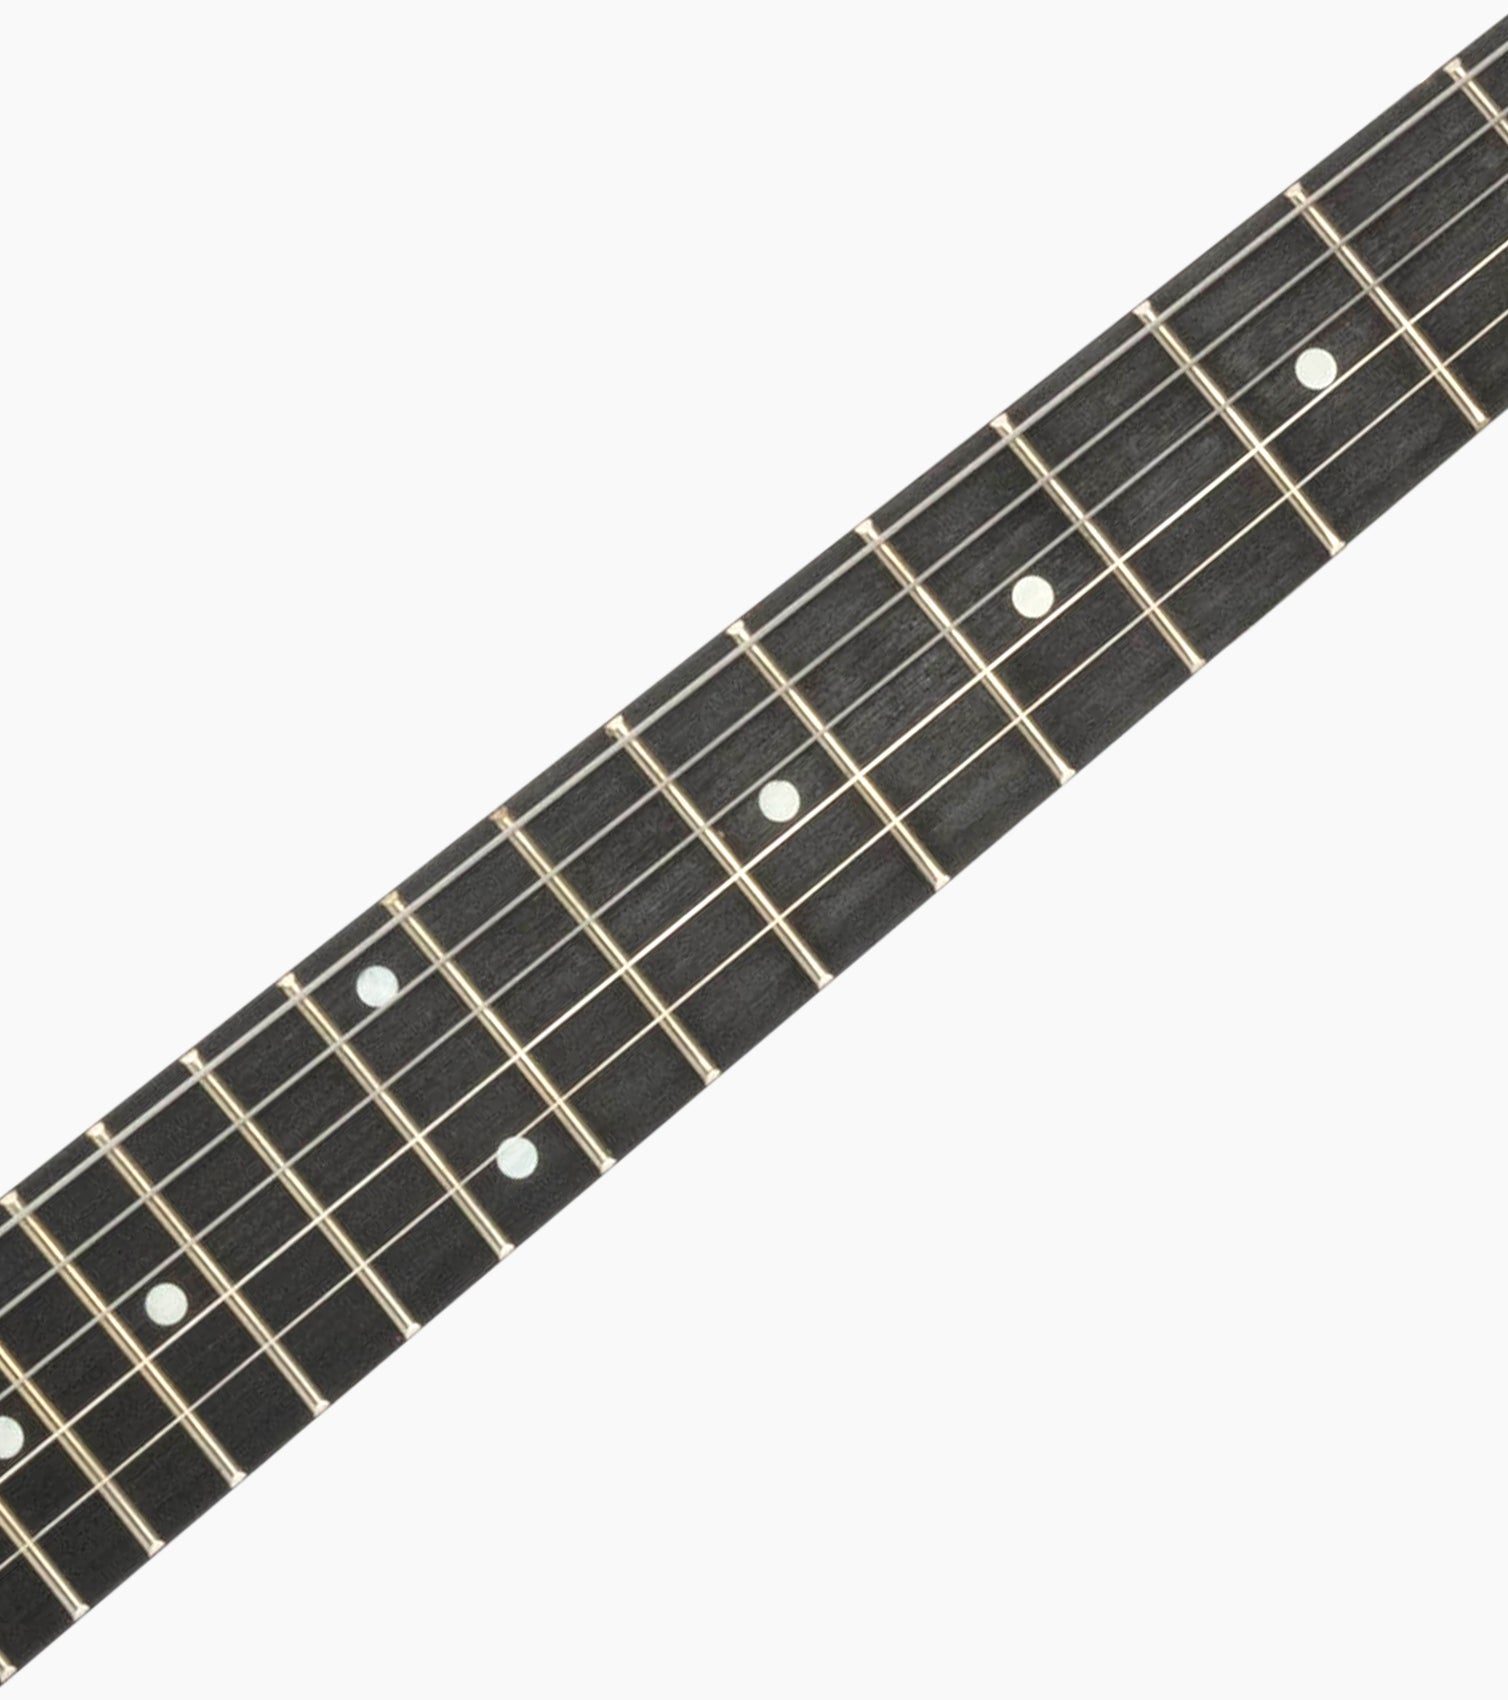 close-up of Green single-cutaway electric guitar fretboard